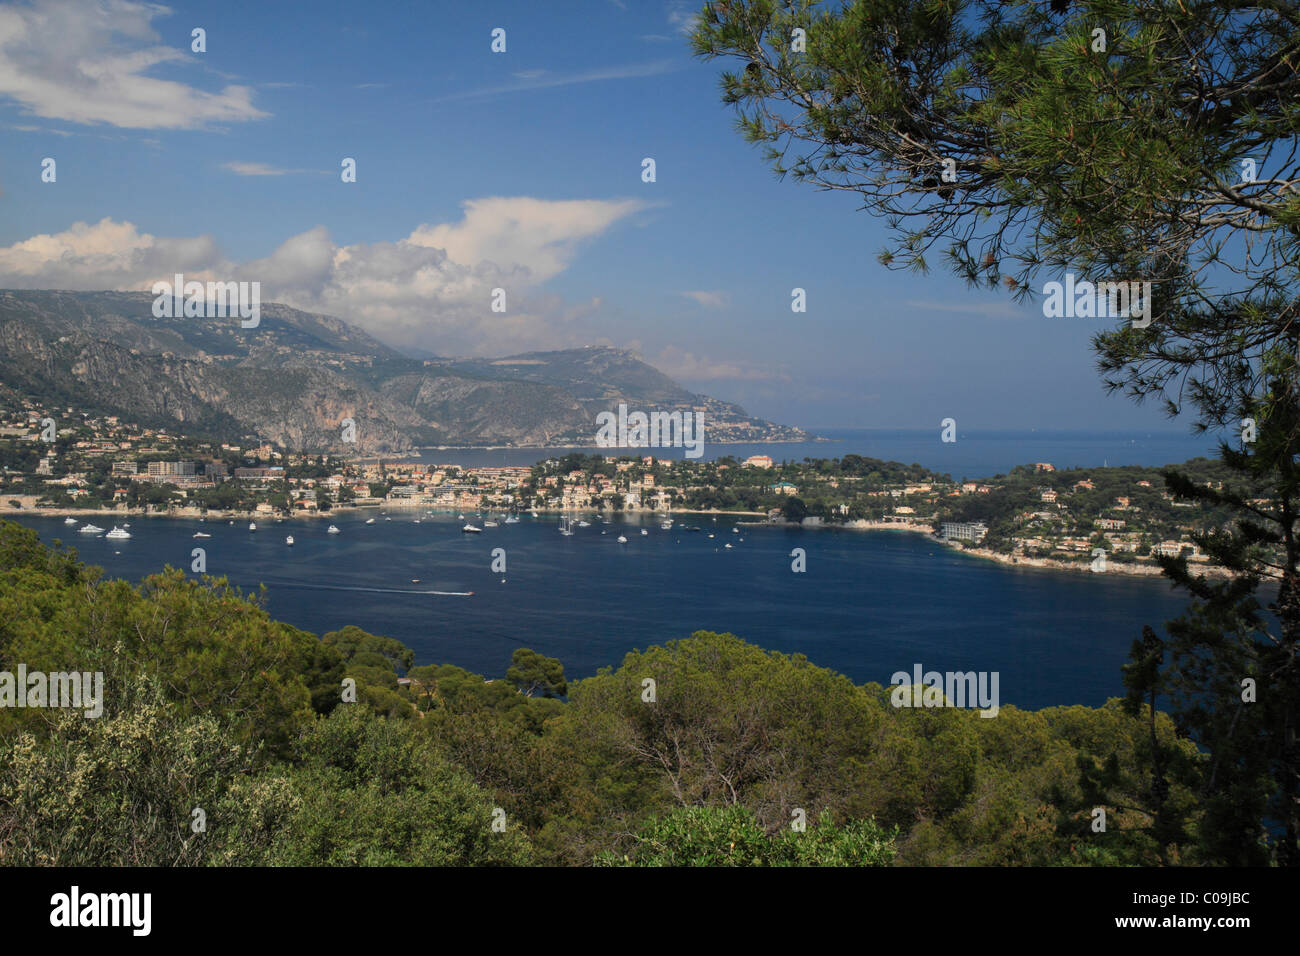 Bucht von Villefranche, gesehen vom Mt. Mont Boron, Alpes Maritimes, Région Provence Alpes Côte d ' Azur, Frankreich, Europa Stockfoto